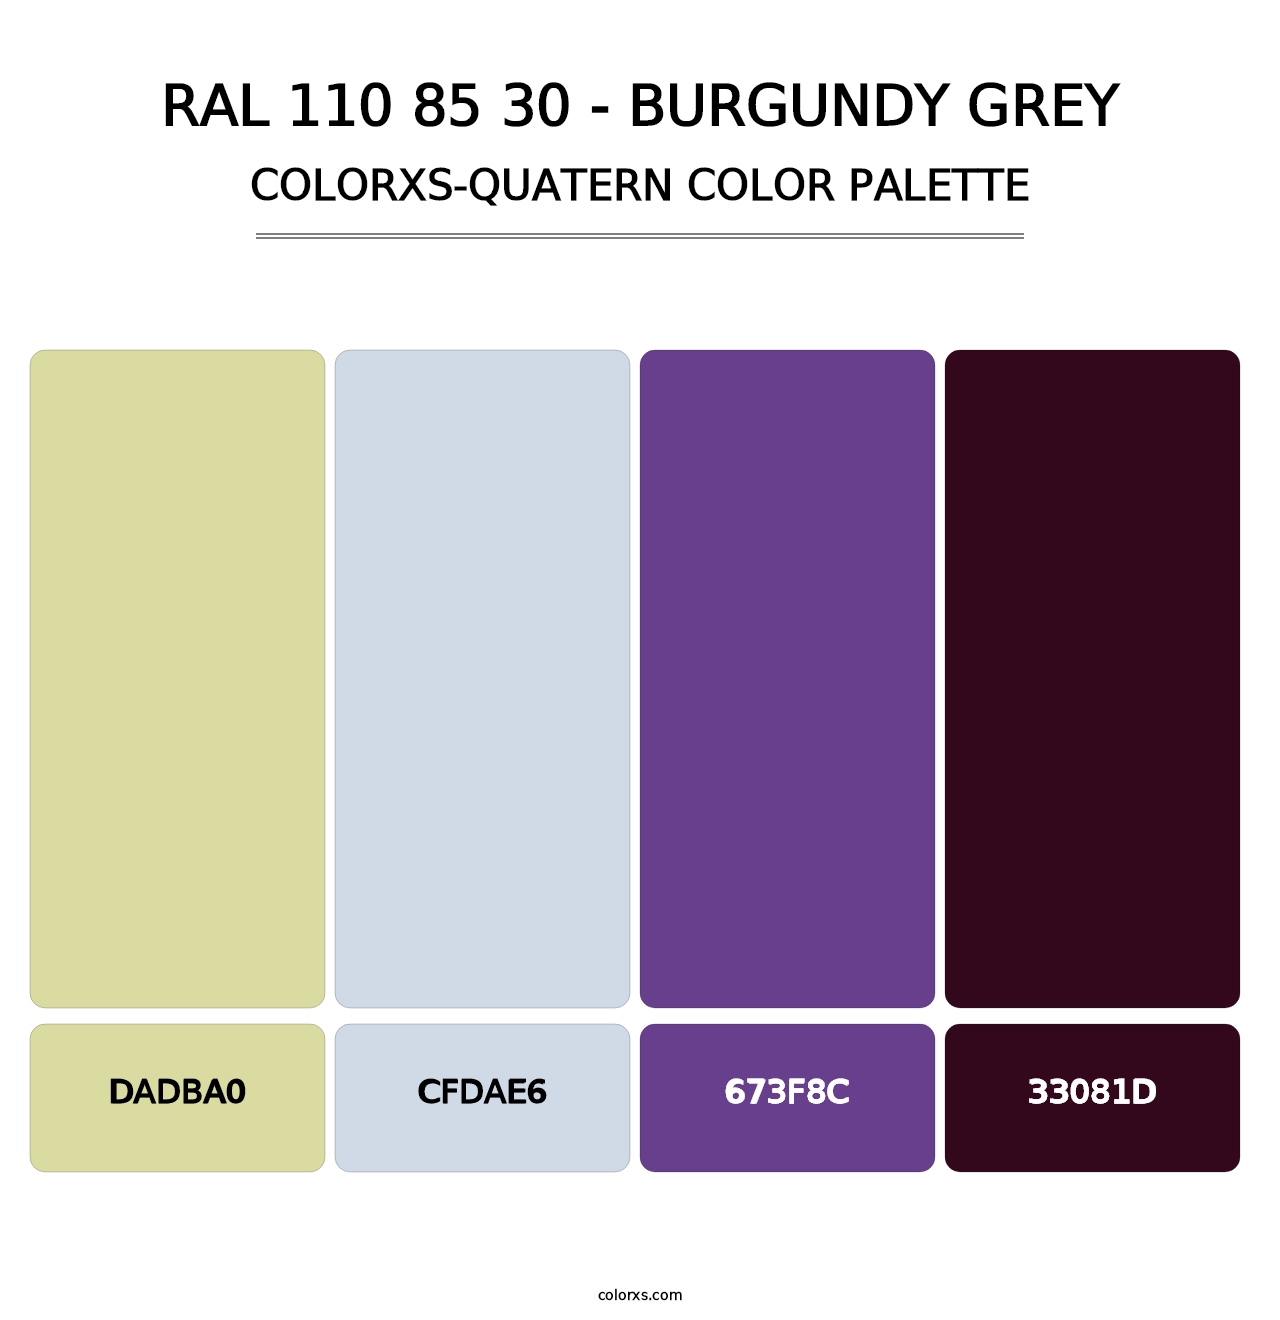 RAL 110 85 30 - Burgundy Grey - Colorxs Quatern Palette